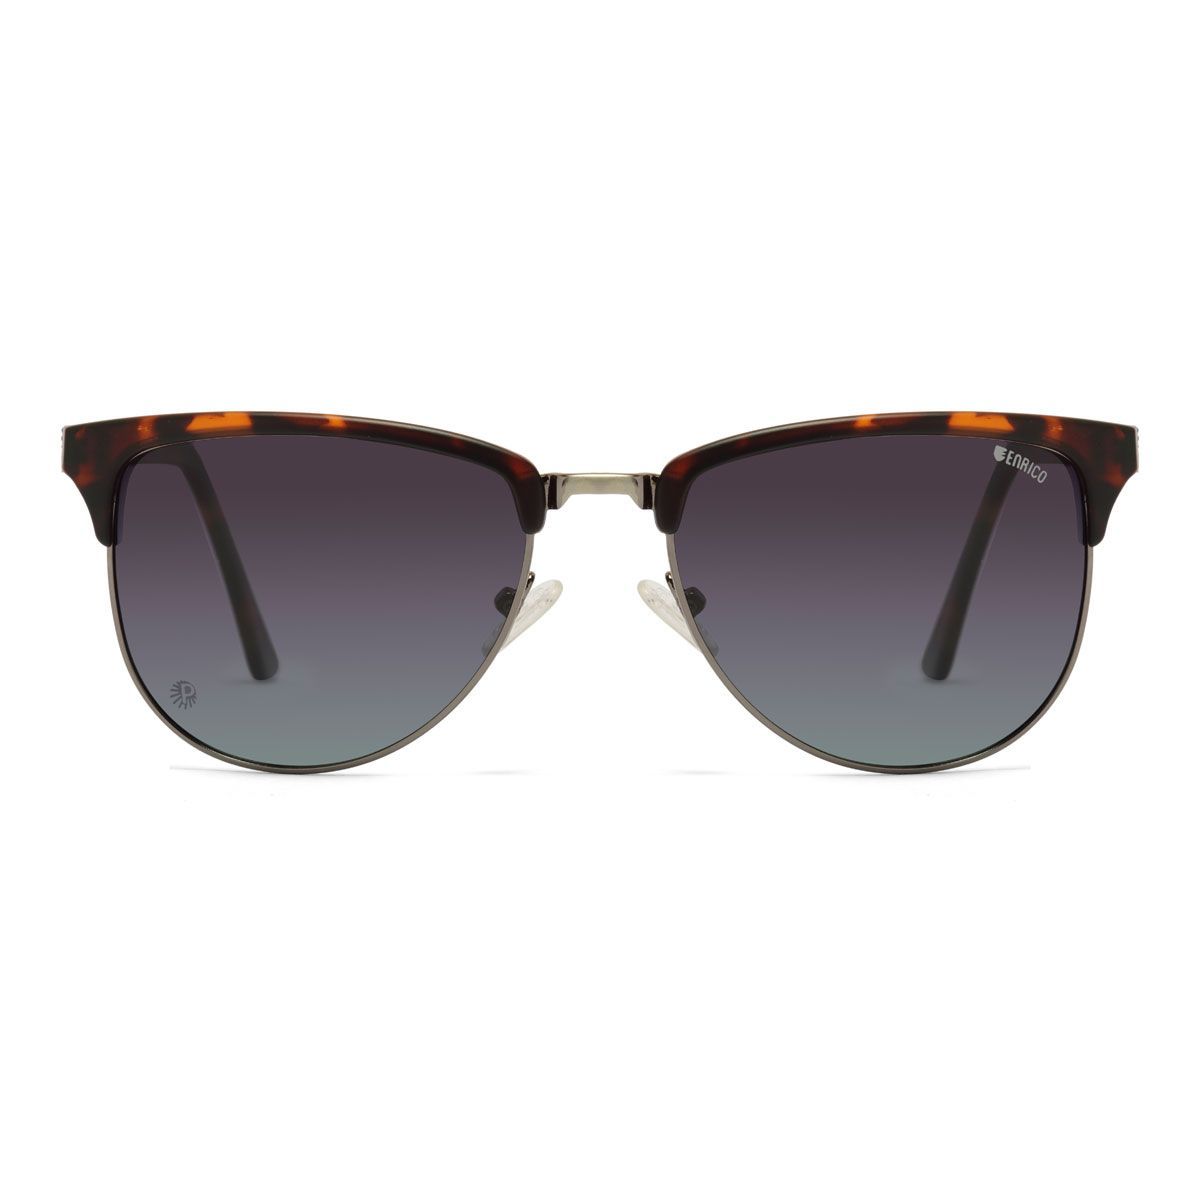 Enrico Demi Polycarbonate Wayfarer Solflare Unisex Sunglasses